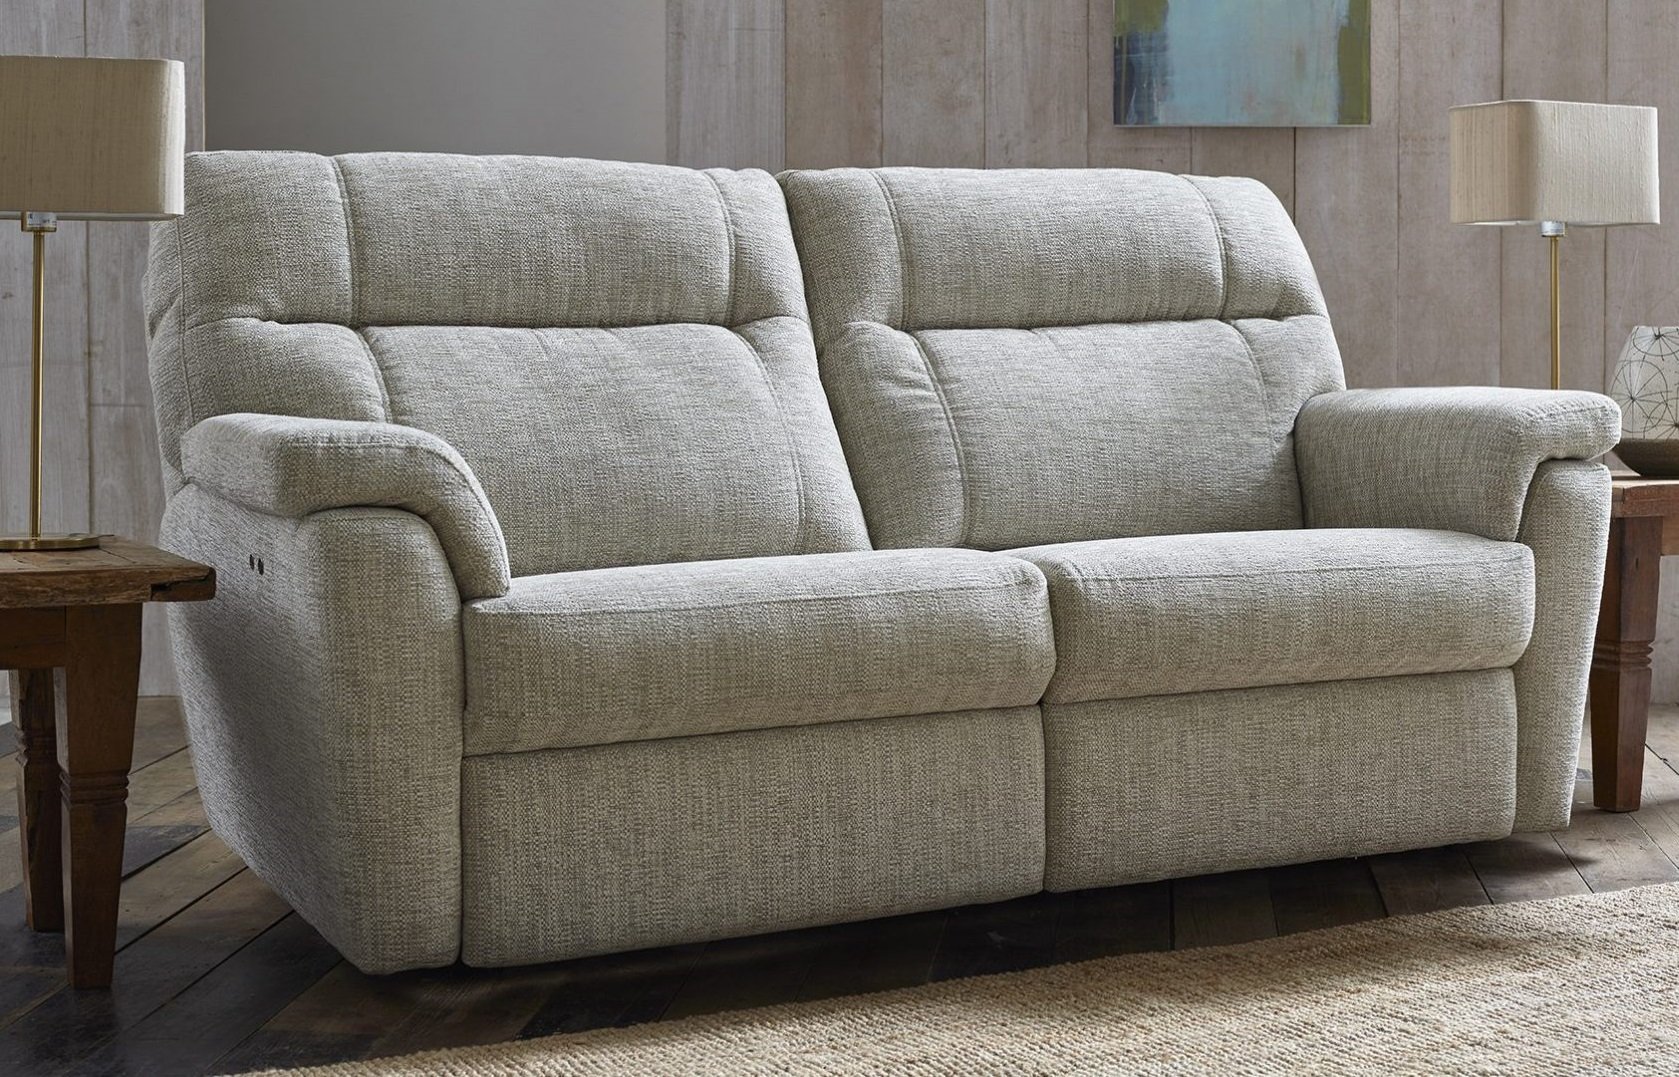 Ashwood Designs Aspen Three Seat Sofa | Lowest Price Promise | Claytons ...